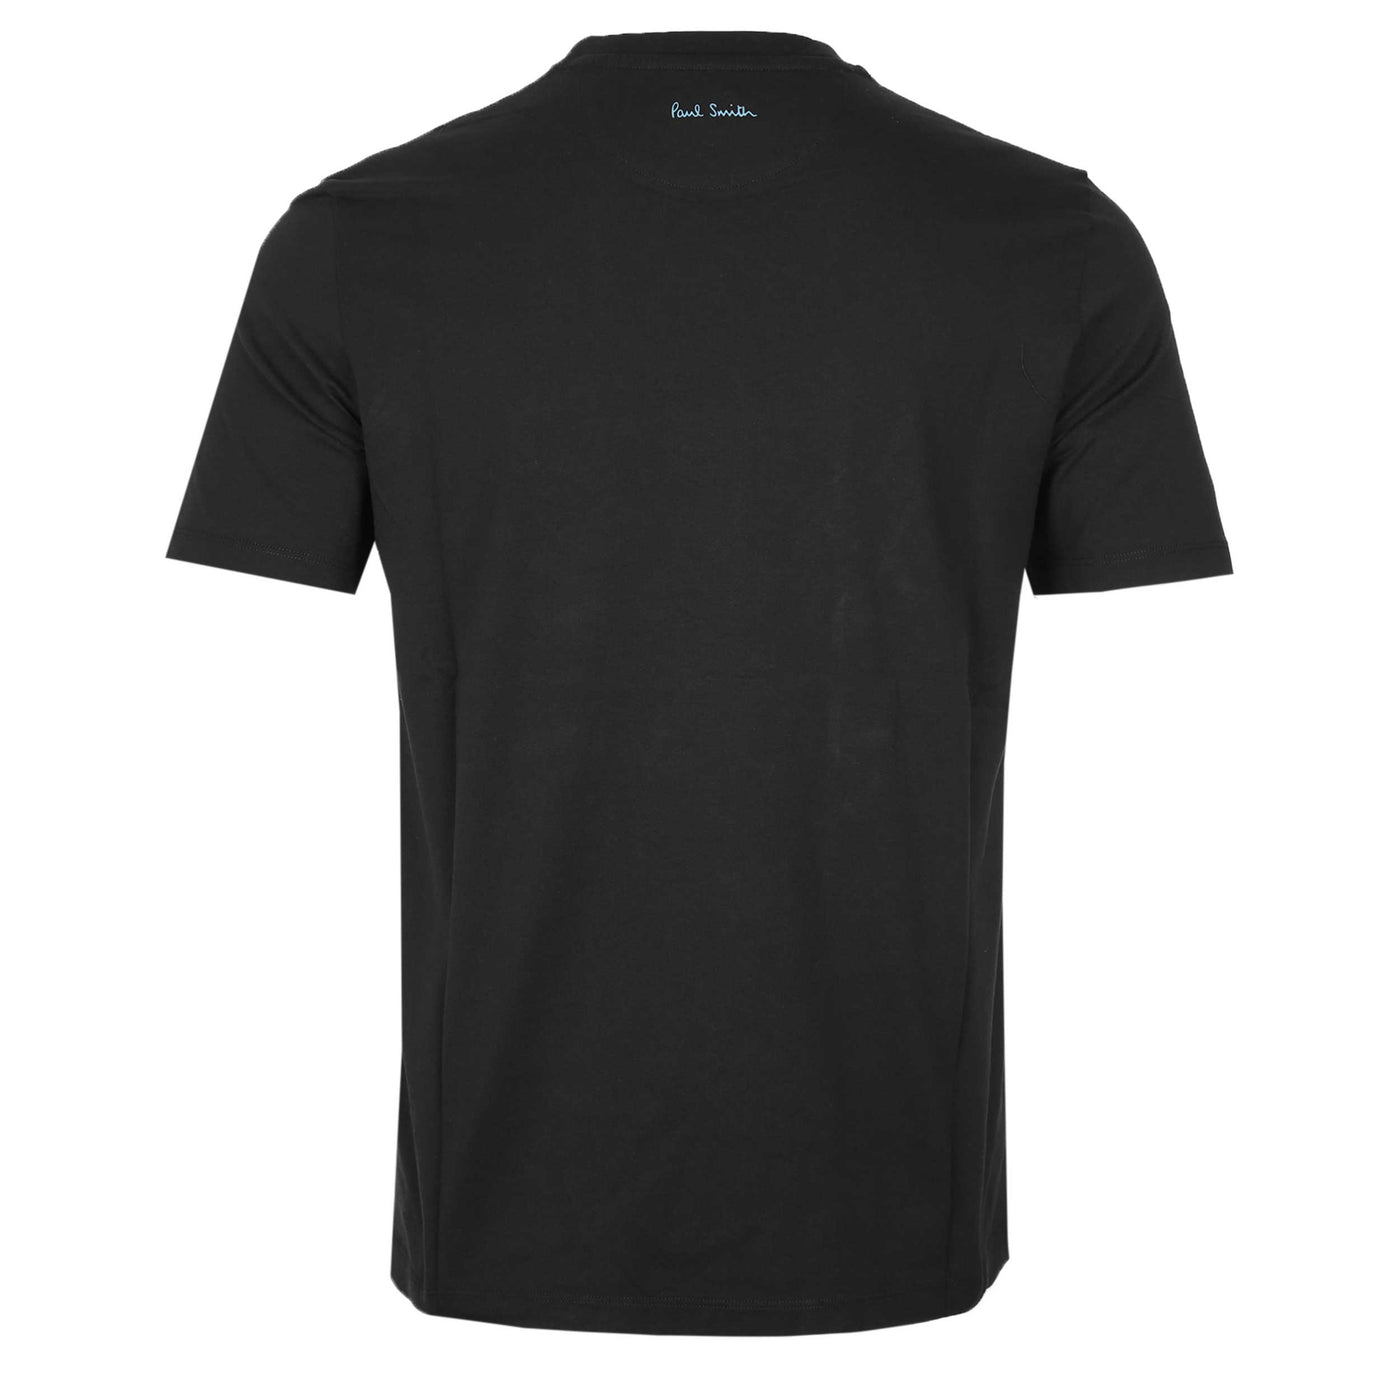 Paul Smith Flower Print T Shirt in Black